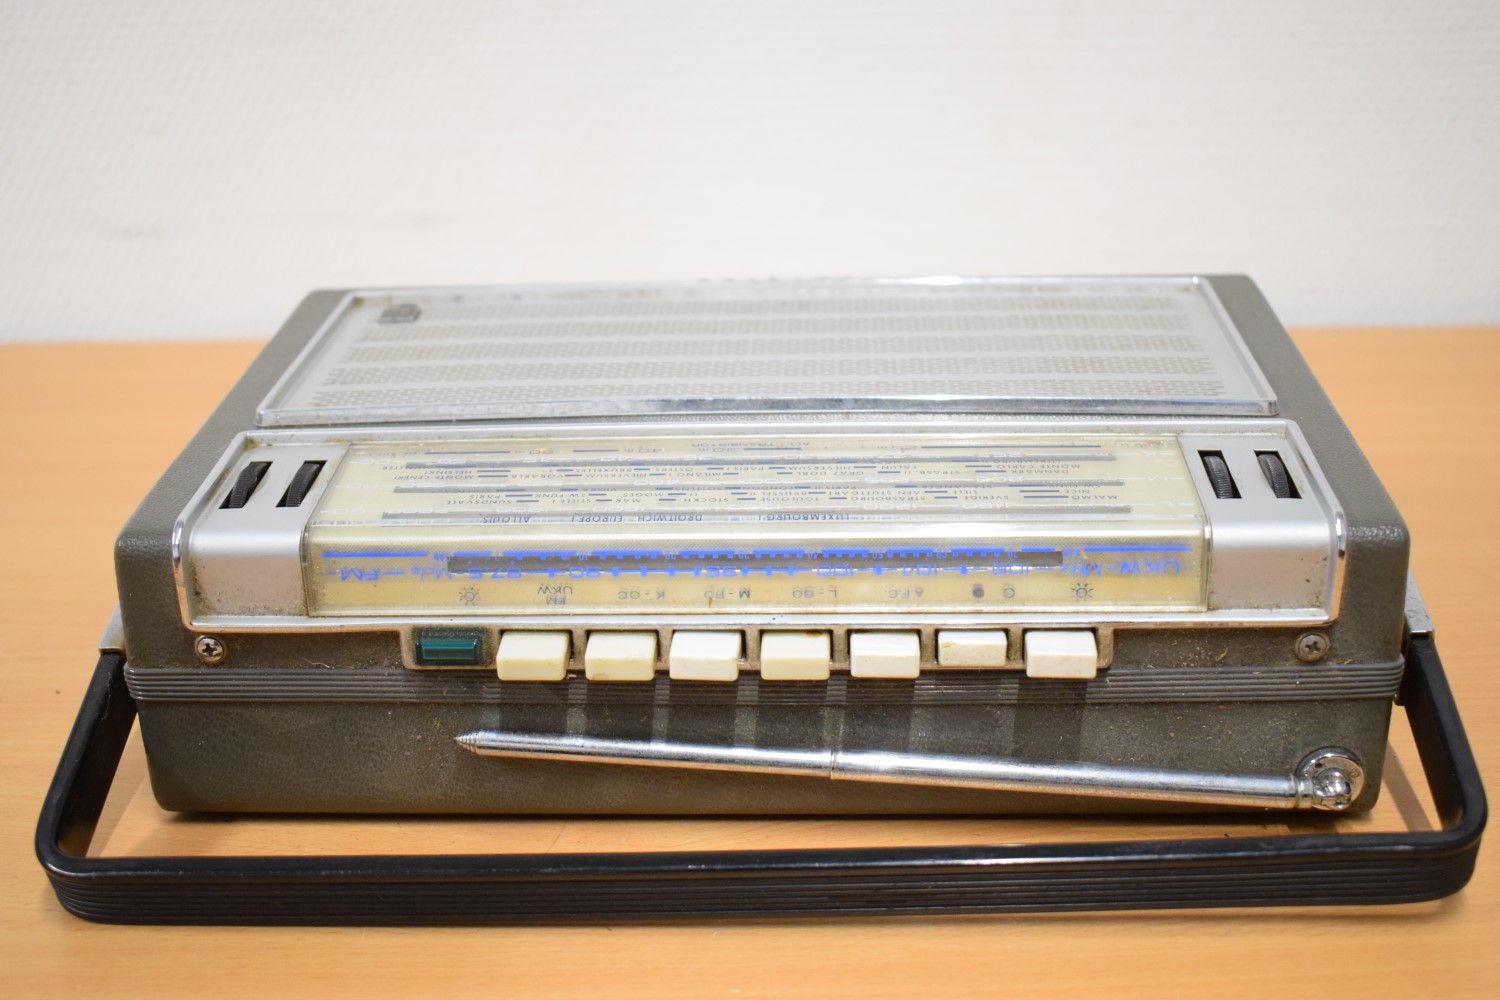 Philips L5W34T/01 Portable Transistor Radio 